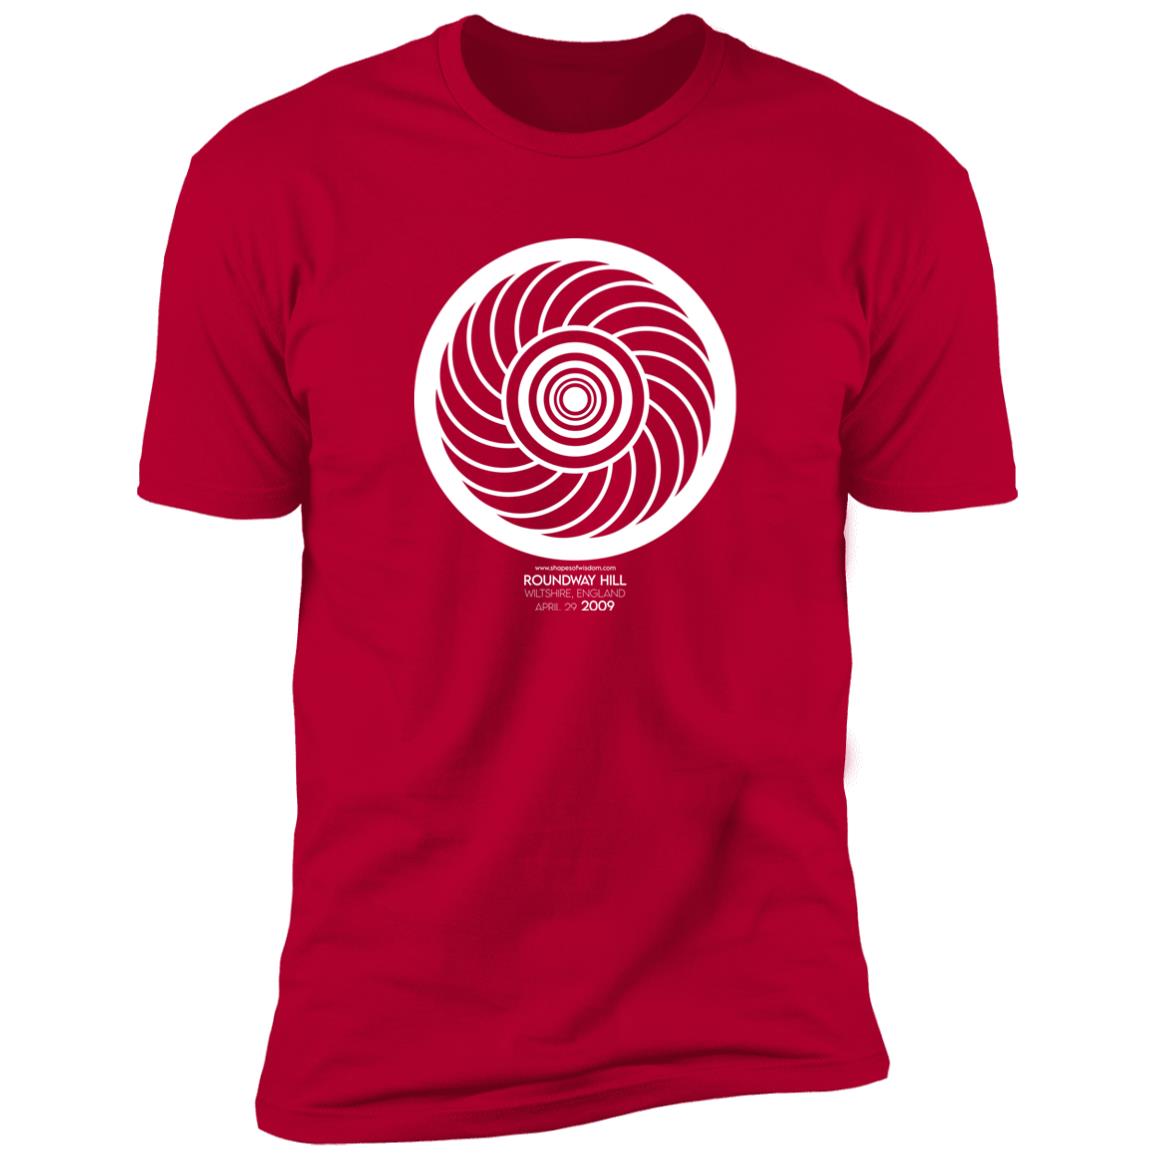 Crop Circle Premium T-Shirt - Roundway Hill